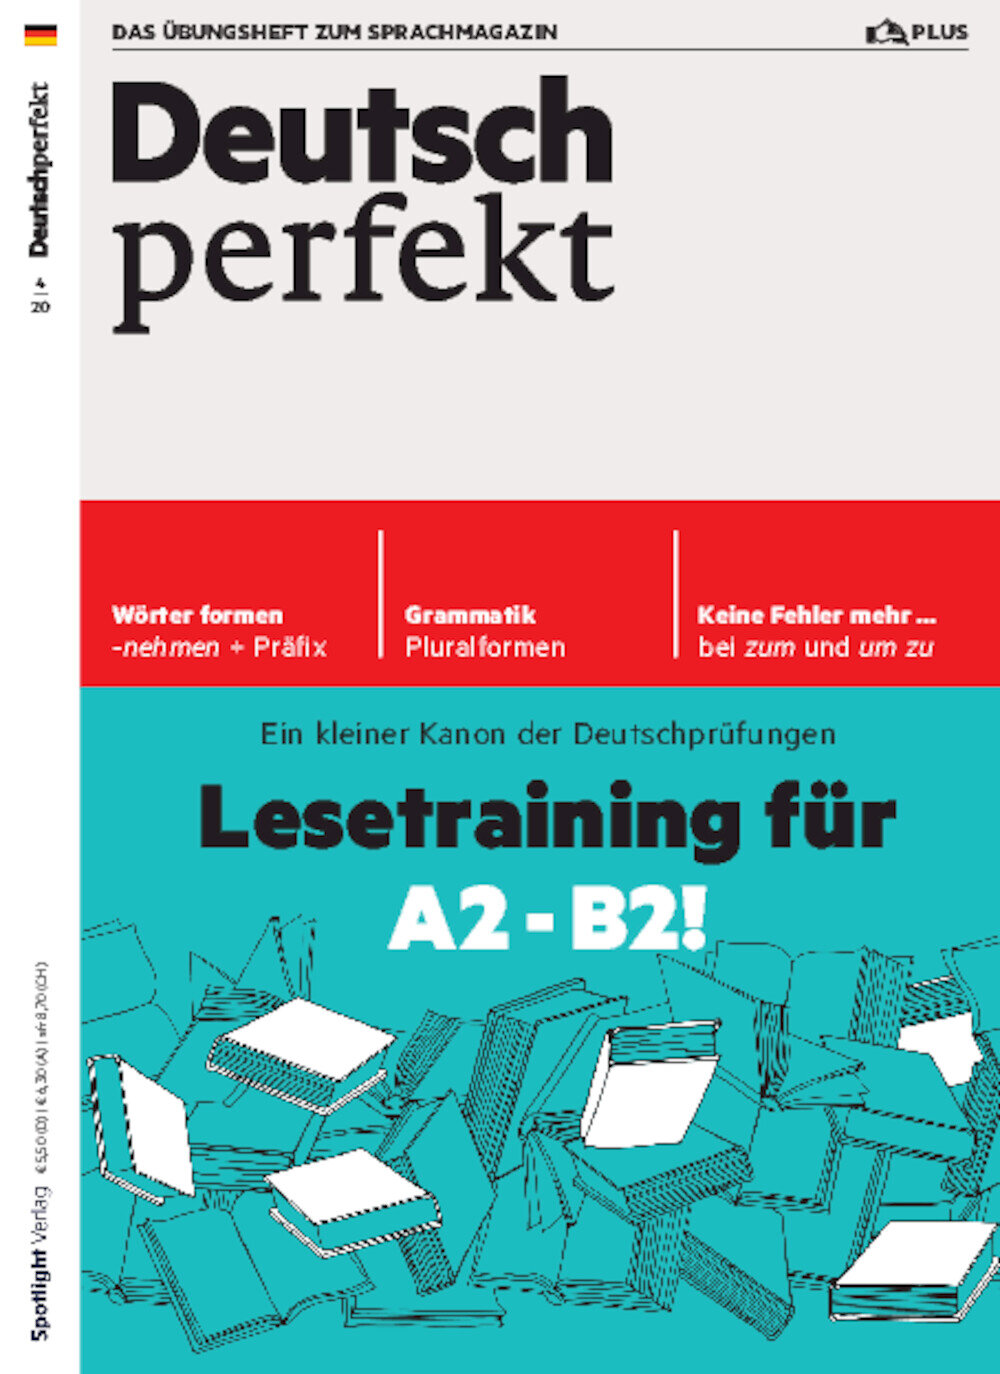 Deutsch perfekt PLUS ePaper 04/2020